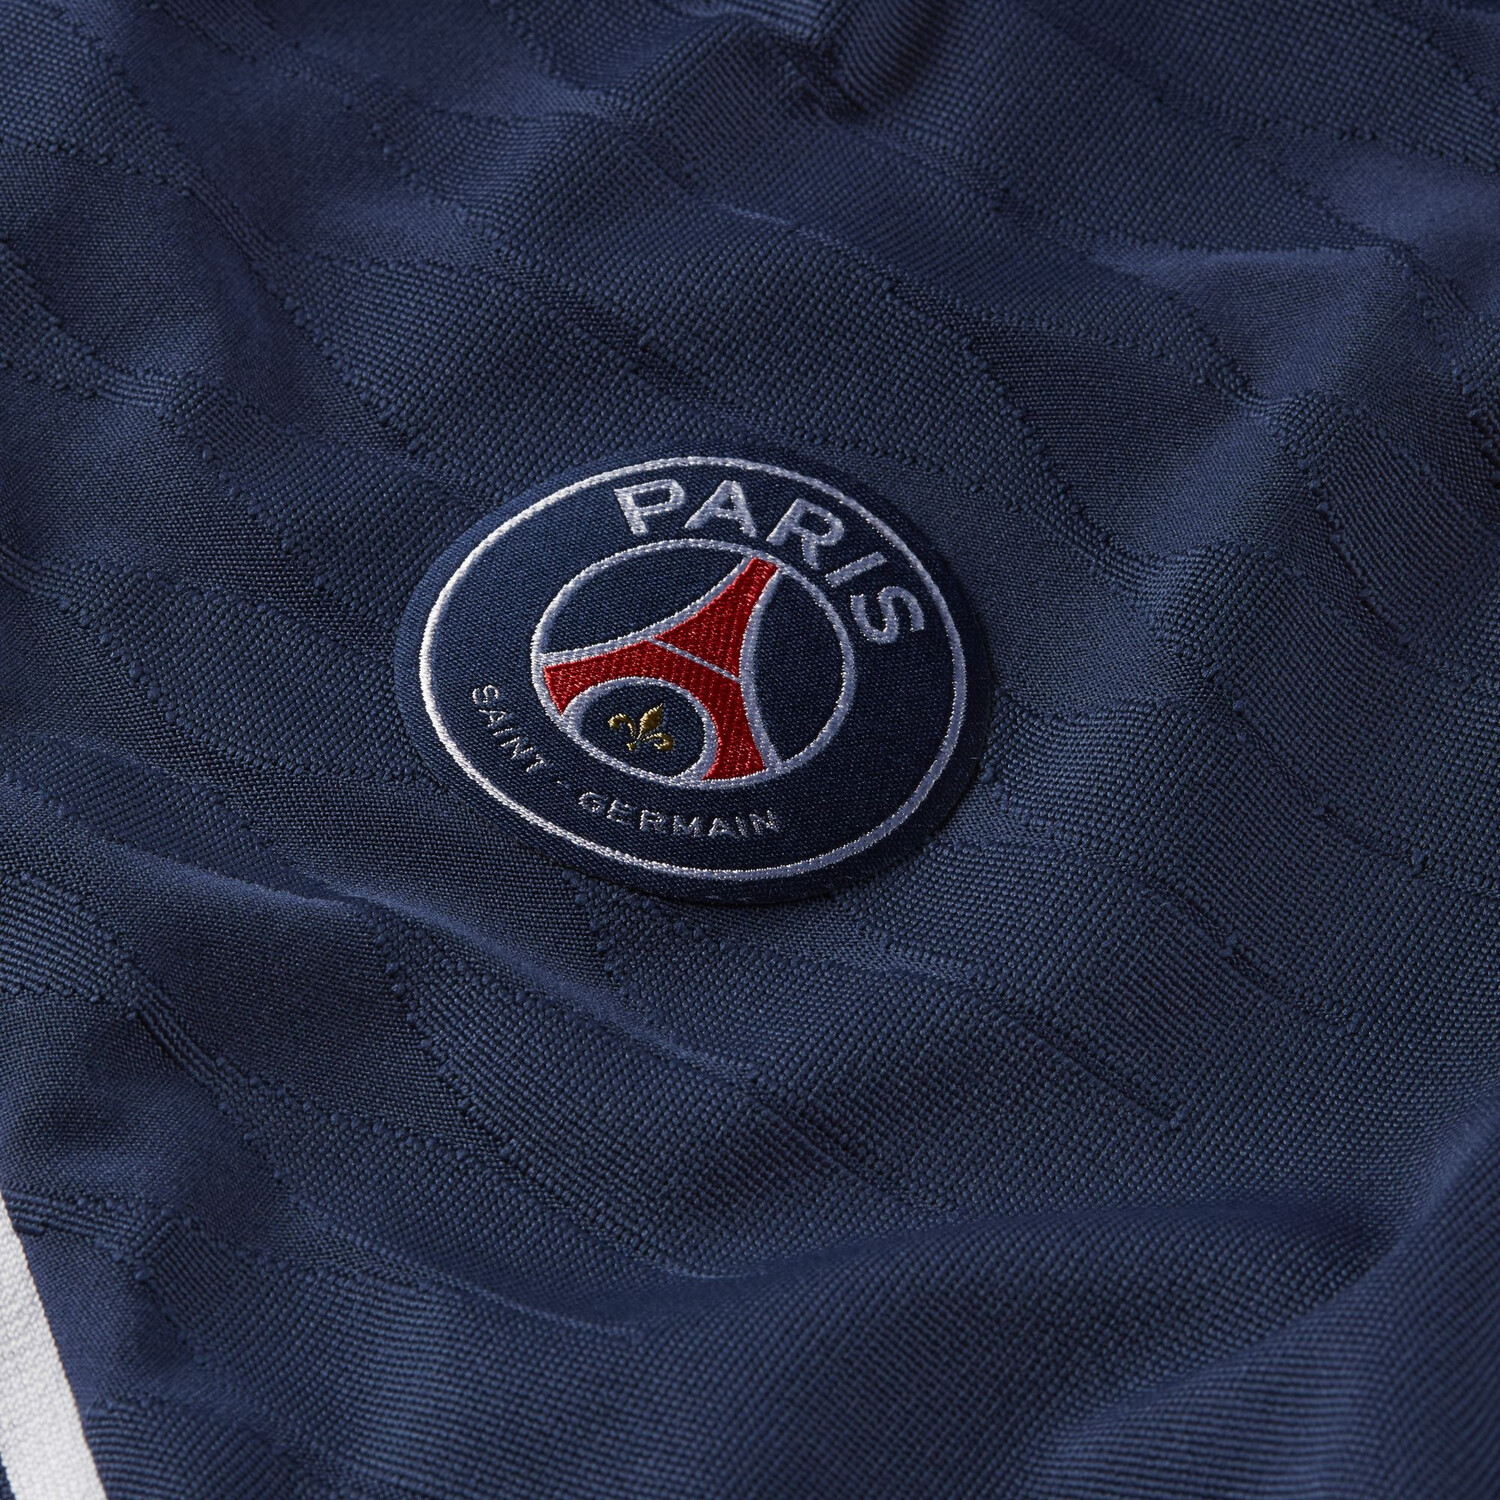 Pantalon survêtement PSG Strike Elite bleu 2021/22 sur Foot.fr